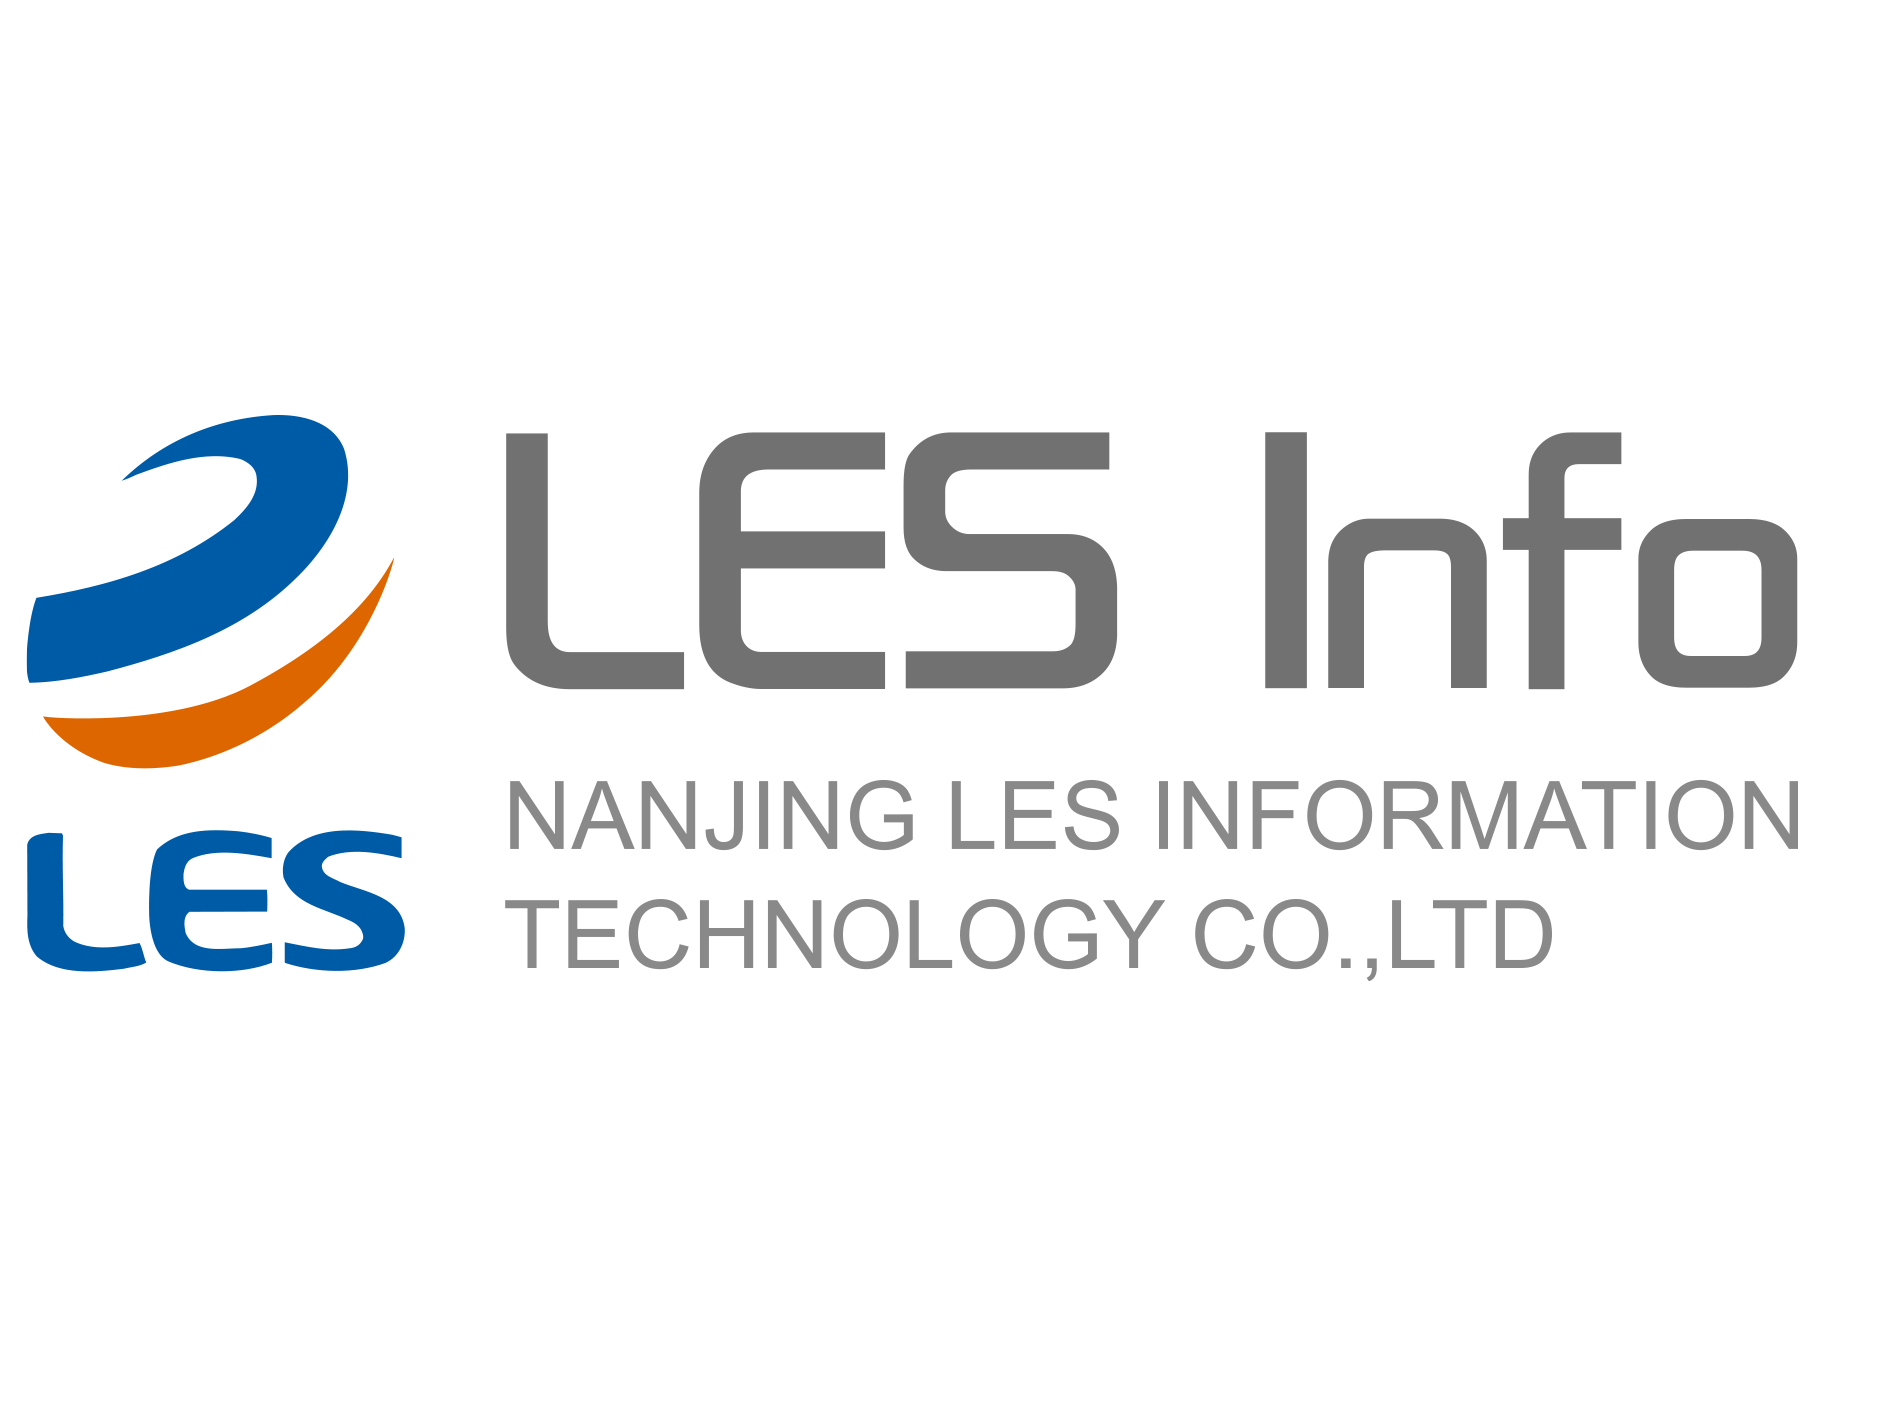 Nanjing Les Information Technology Co. ltd